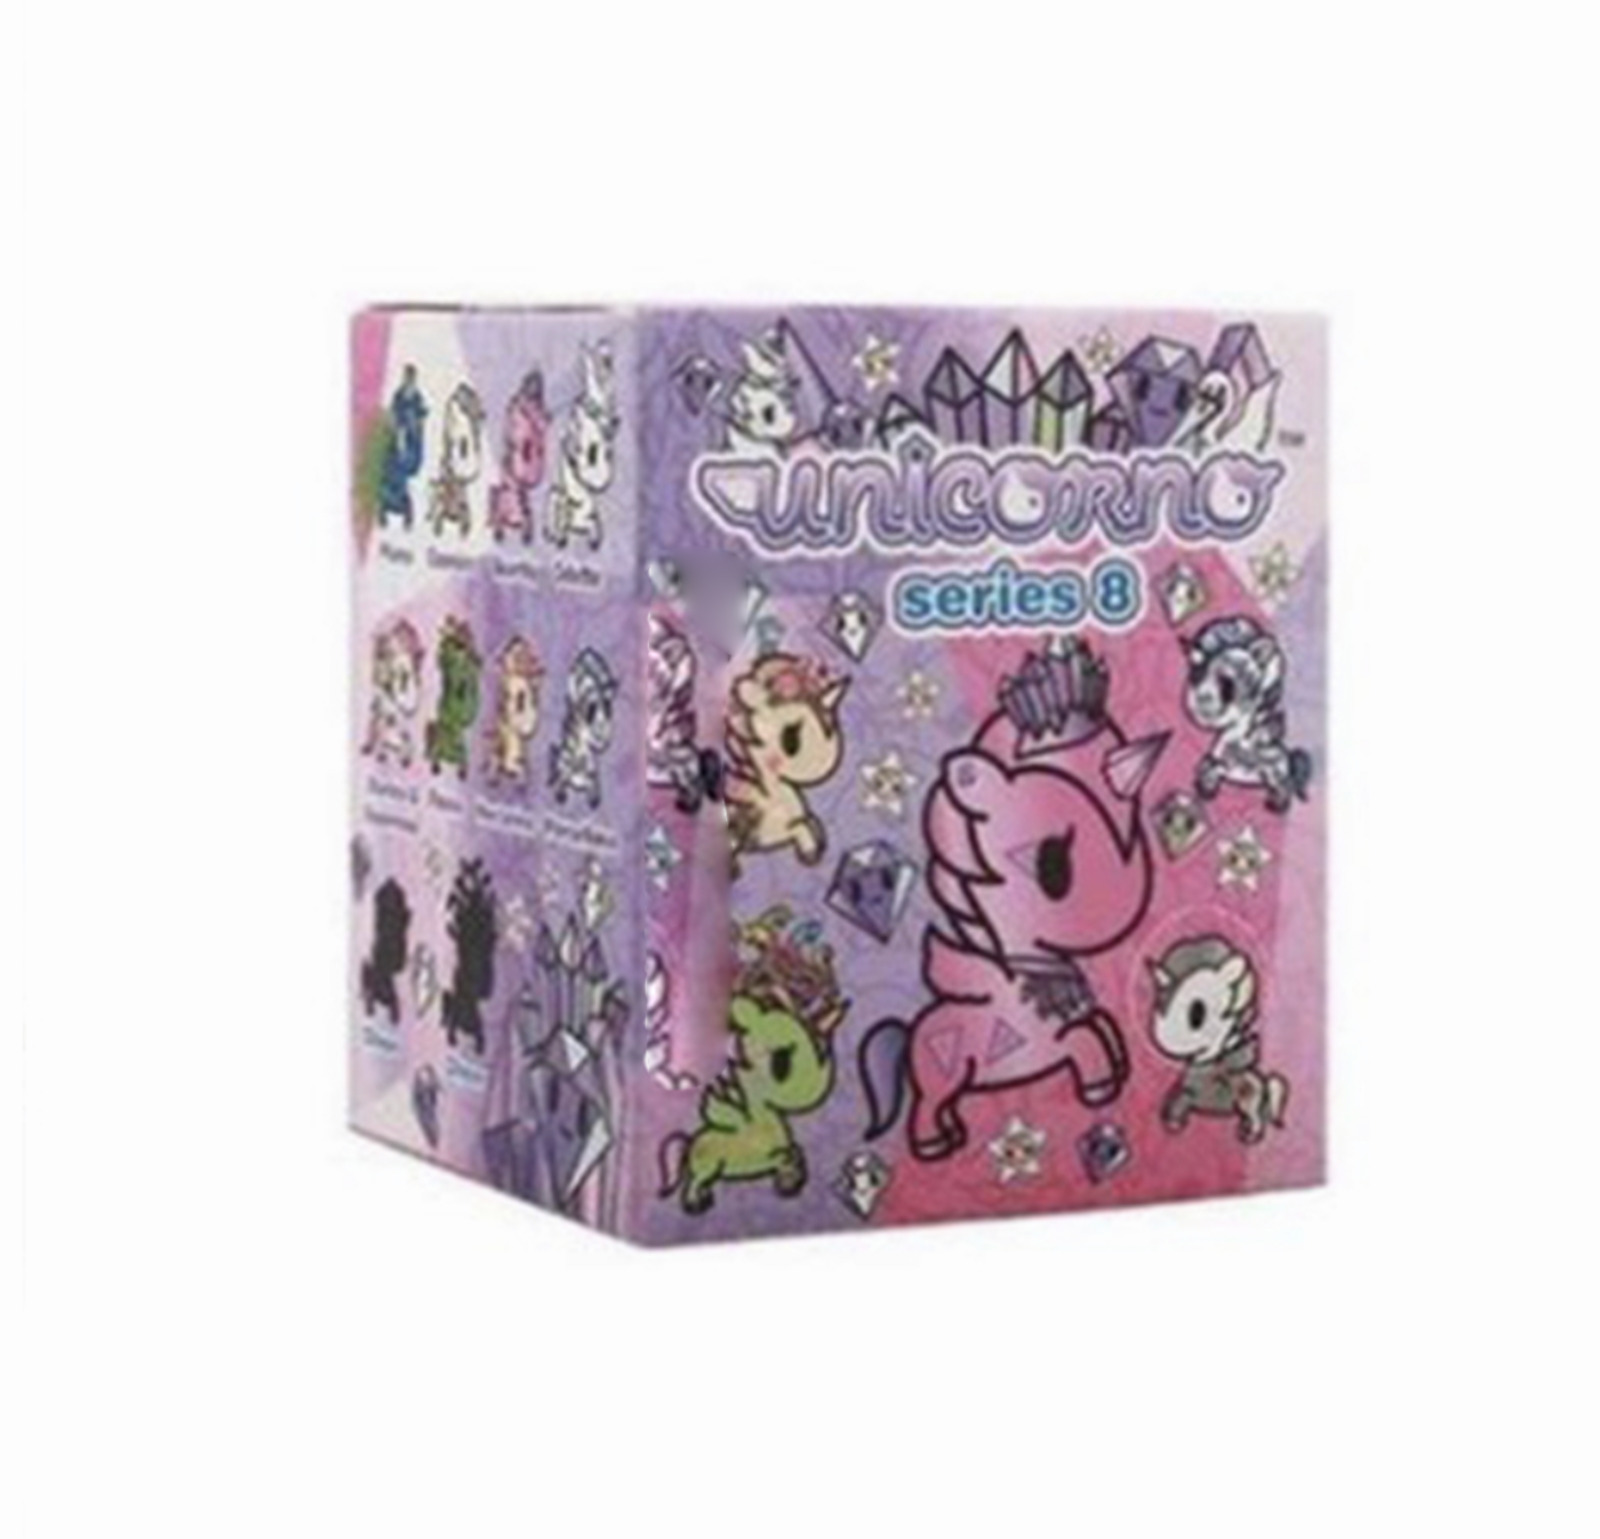 tokidoki unicorn Family 8 Blind Box Mystery Figures Action toys Birthday Gitf